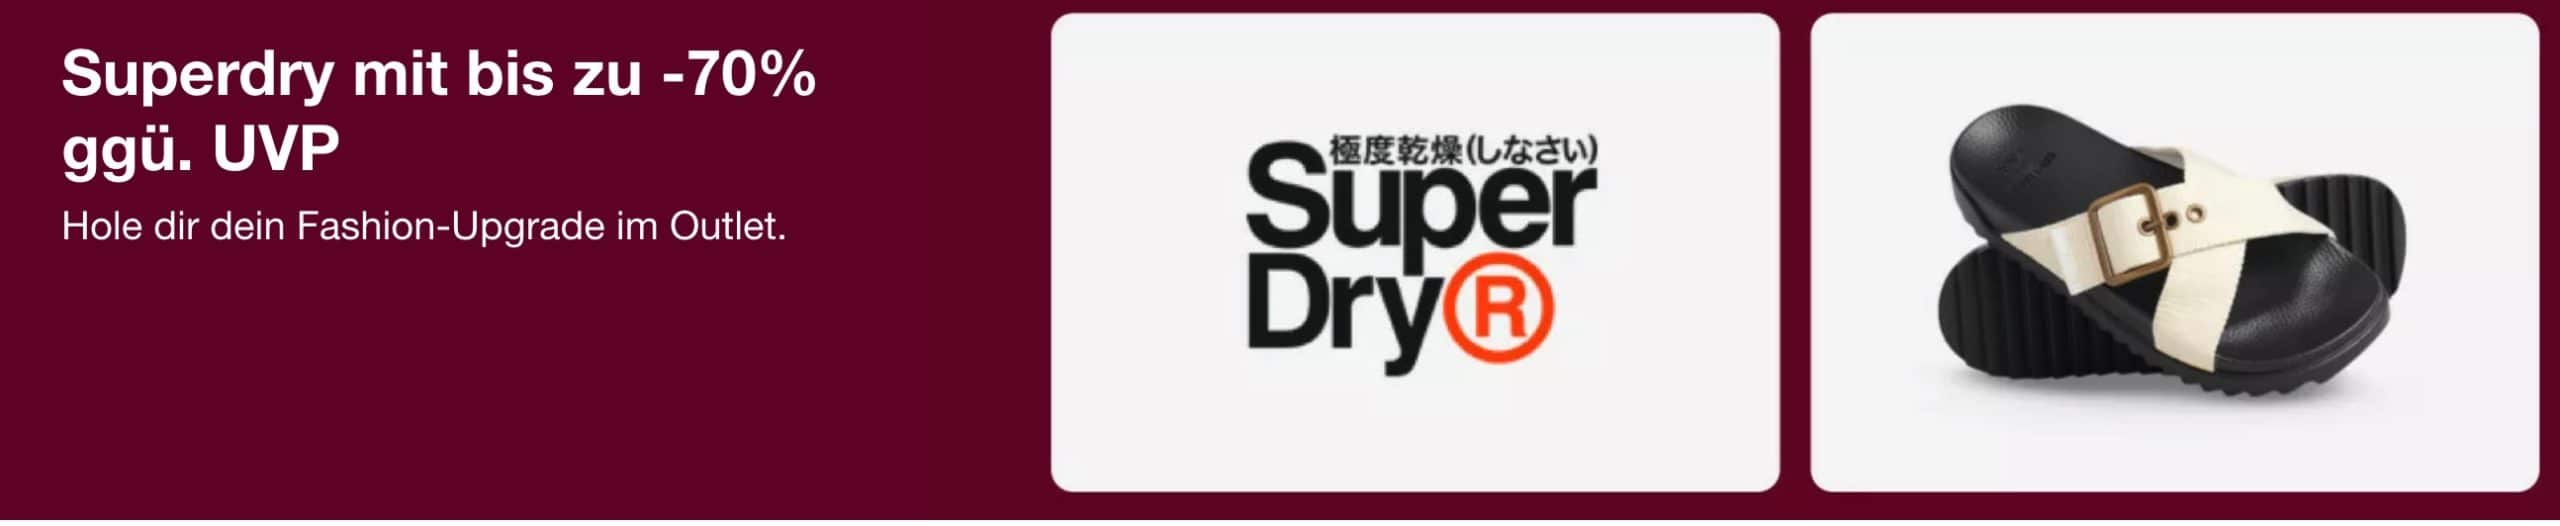 Superdry Ebay 70 Prozent scaled